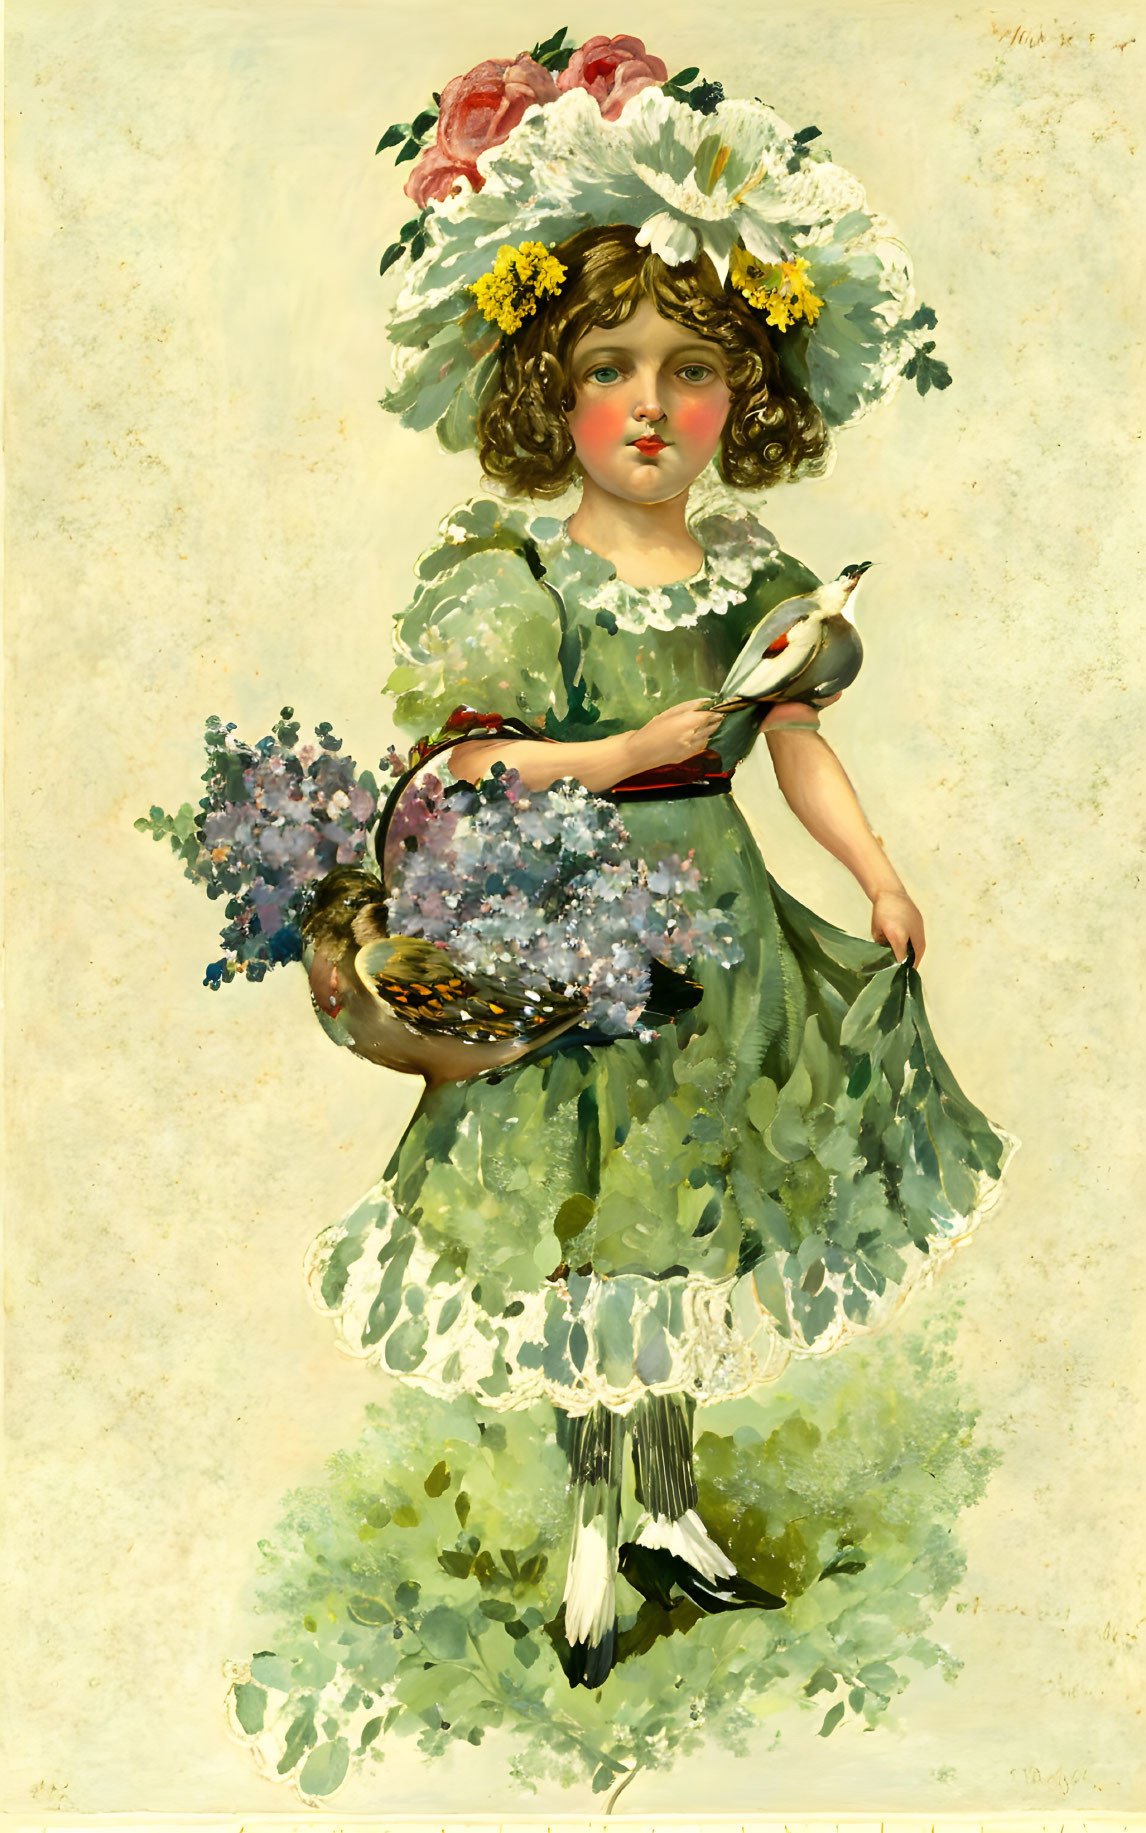 Vintage Illustration: Young Girl in Green Dress with Flower Basket